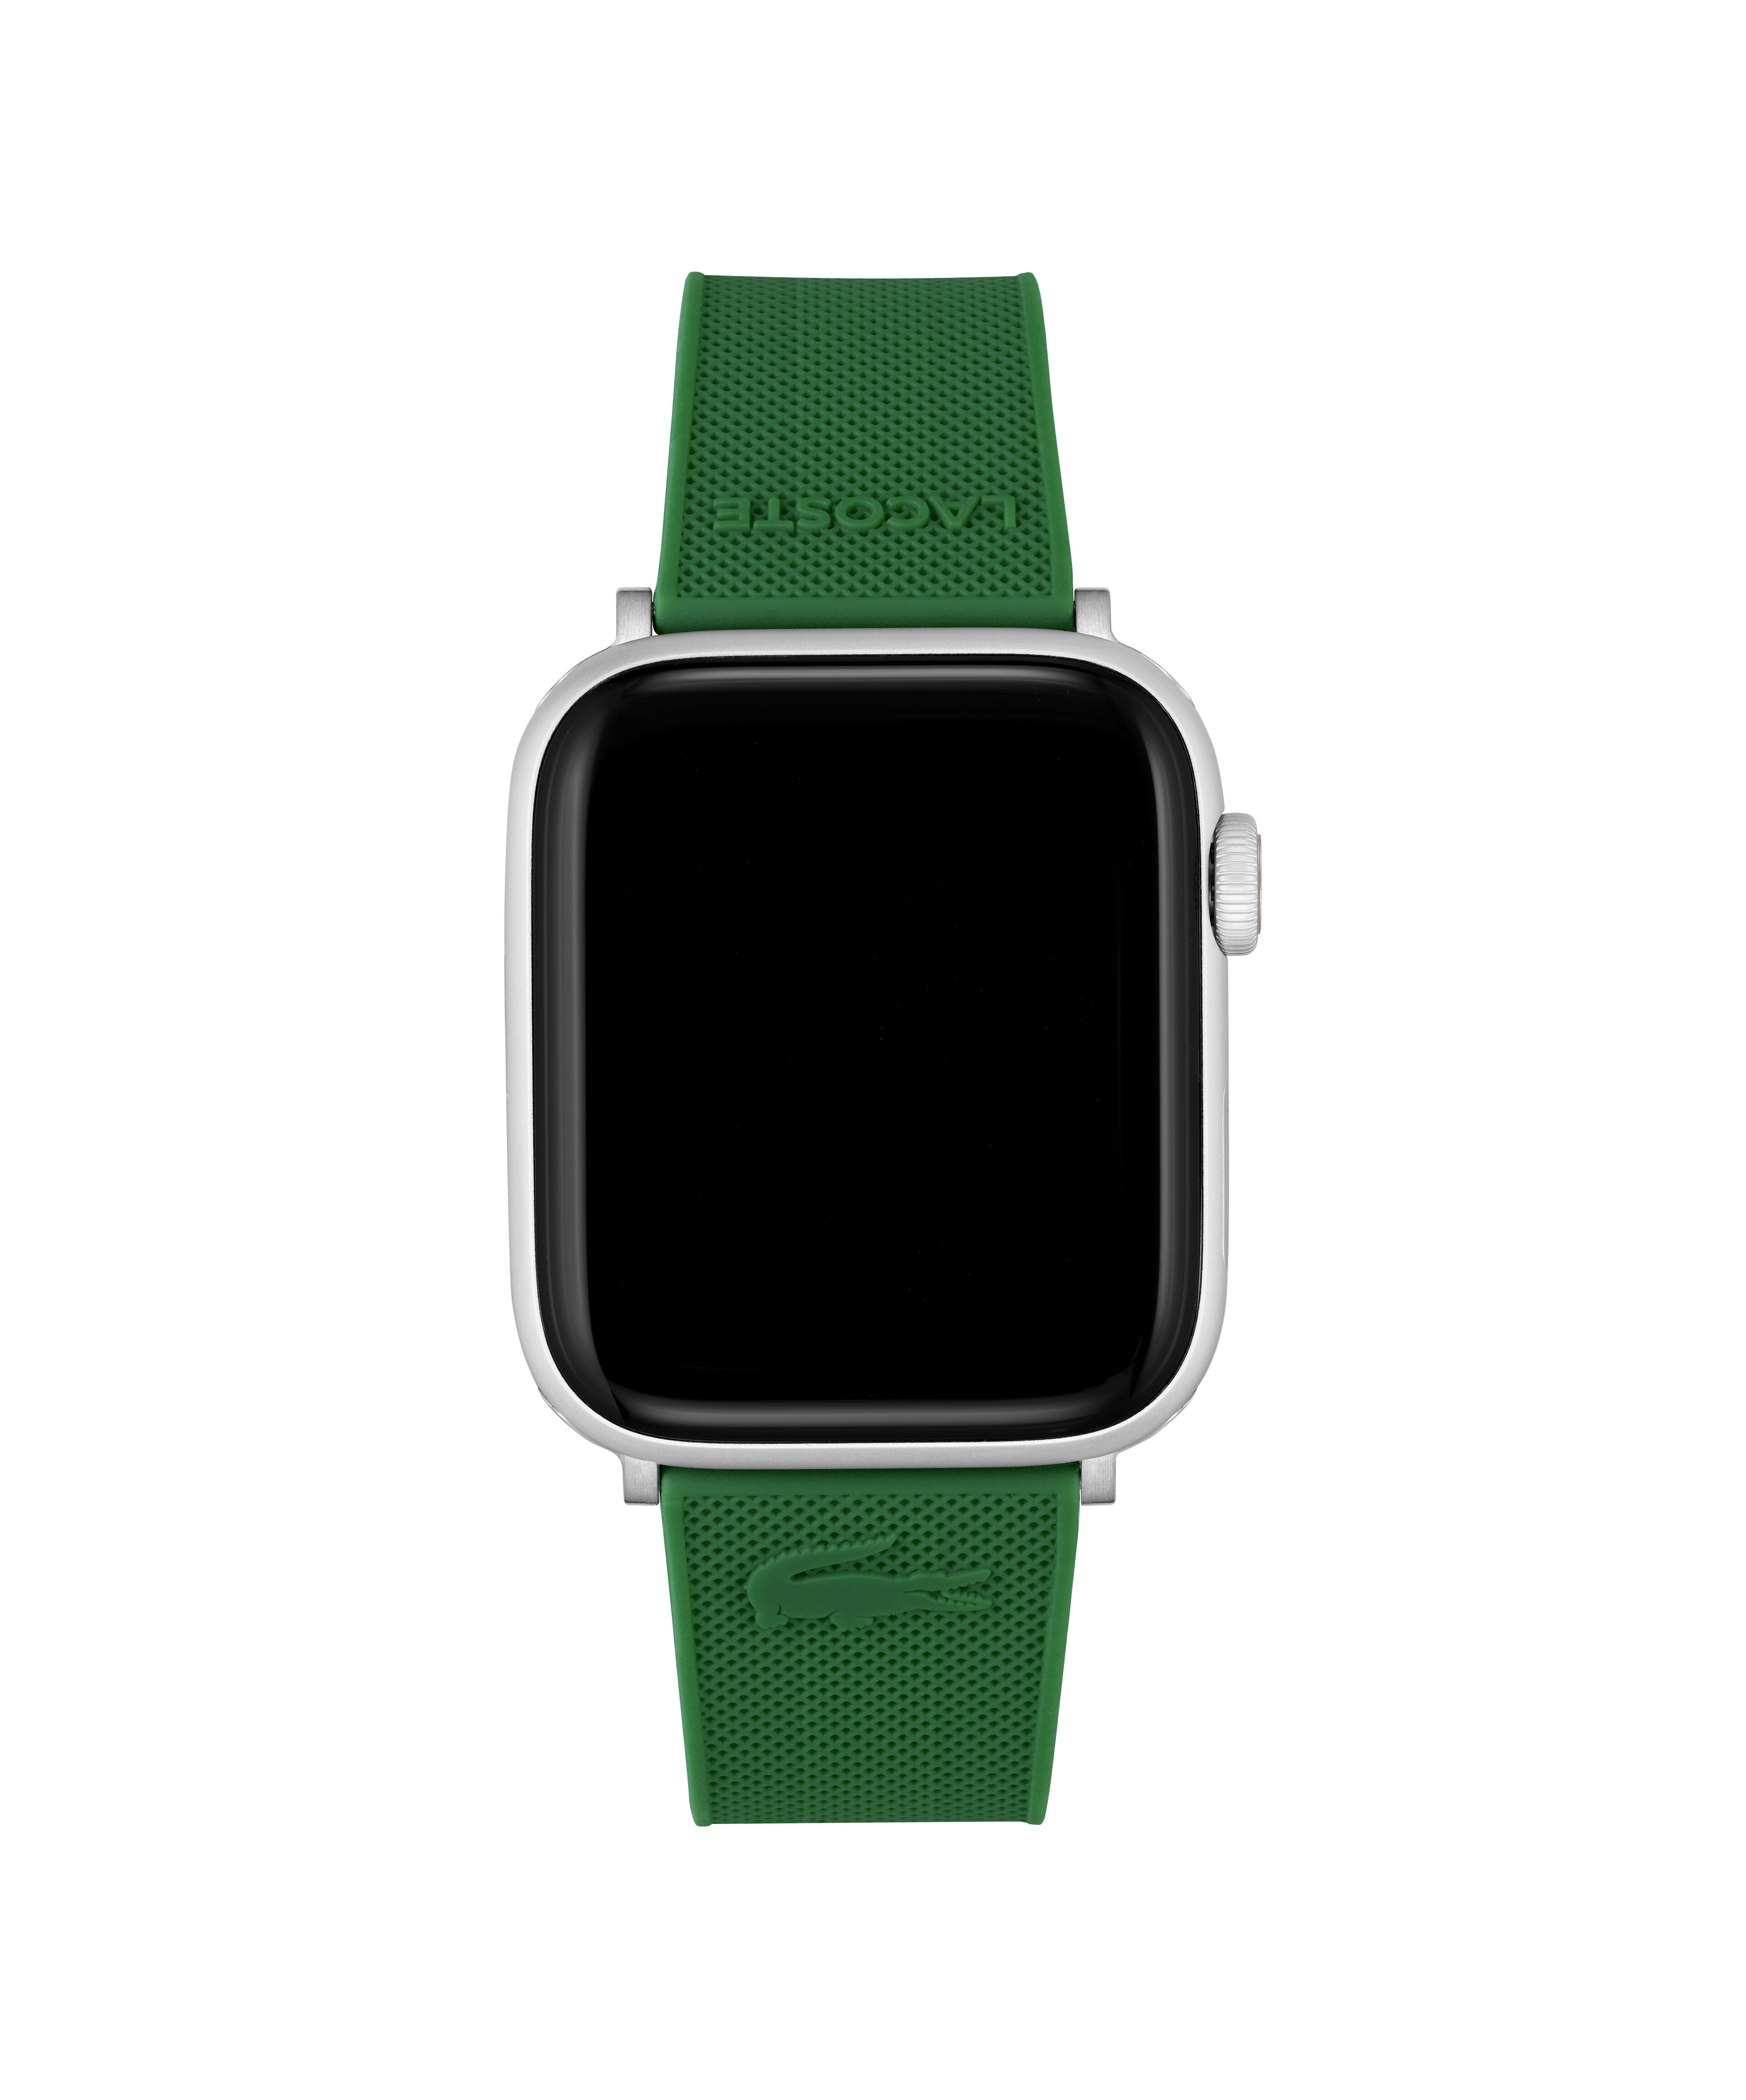 Lacoste | Movado Company Store |Lacoste Unisex's Apple Watch Strap